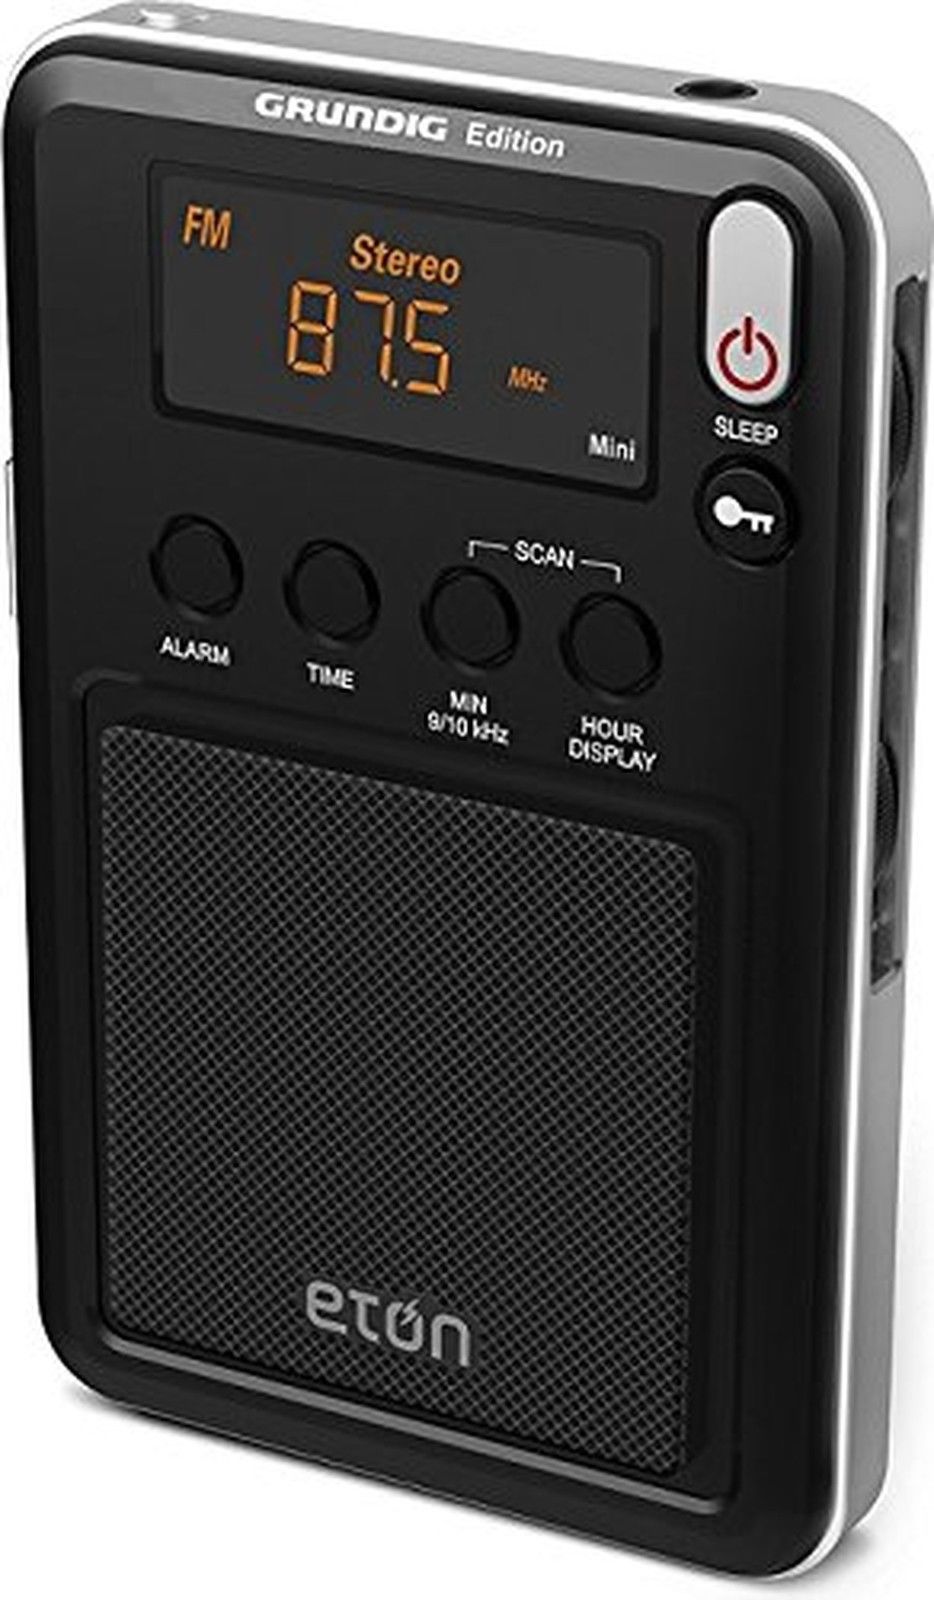 Đài radio cầm tay Grundig Edition Mini - AM/FM/Shortwave - Hitech USA